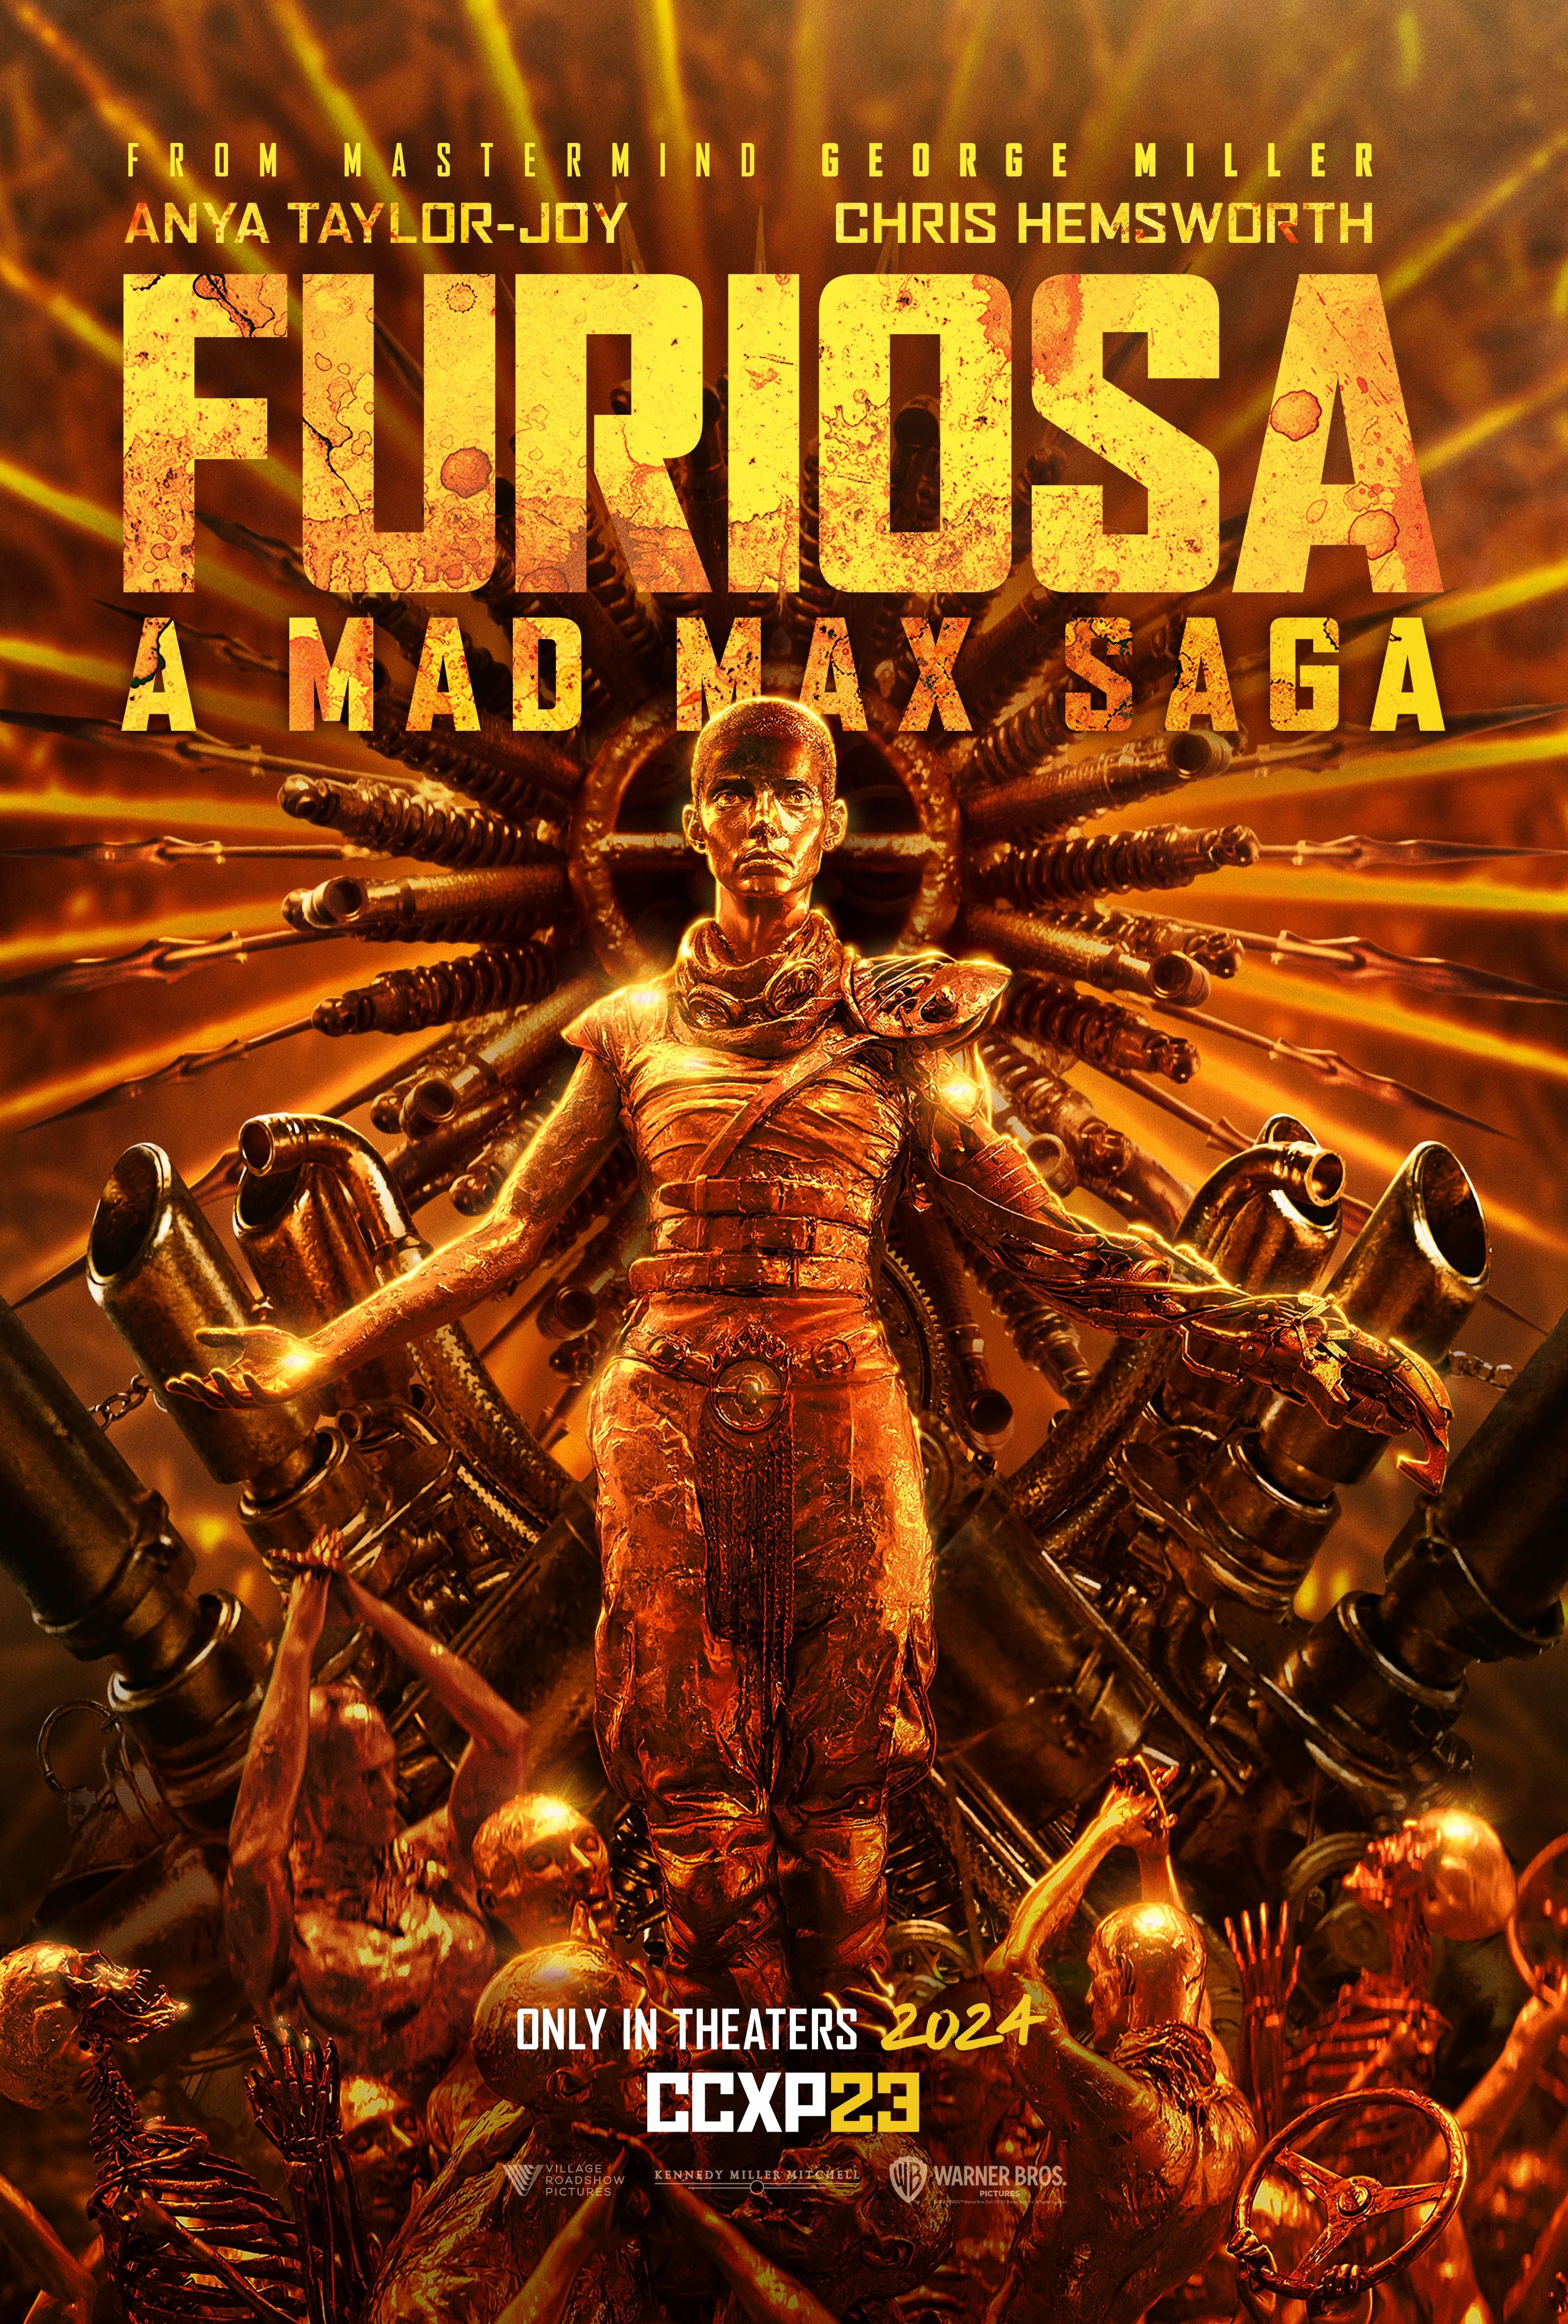 The poster for Furiosa: A Mad Max Saga